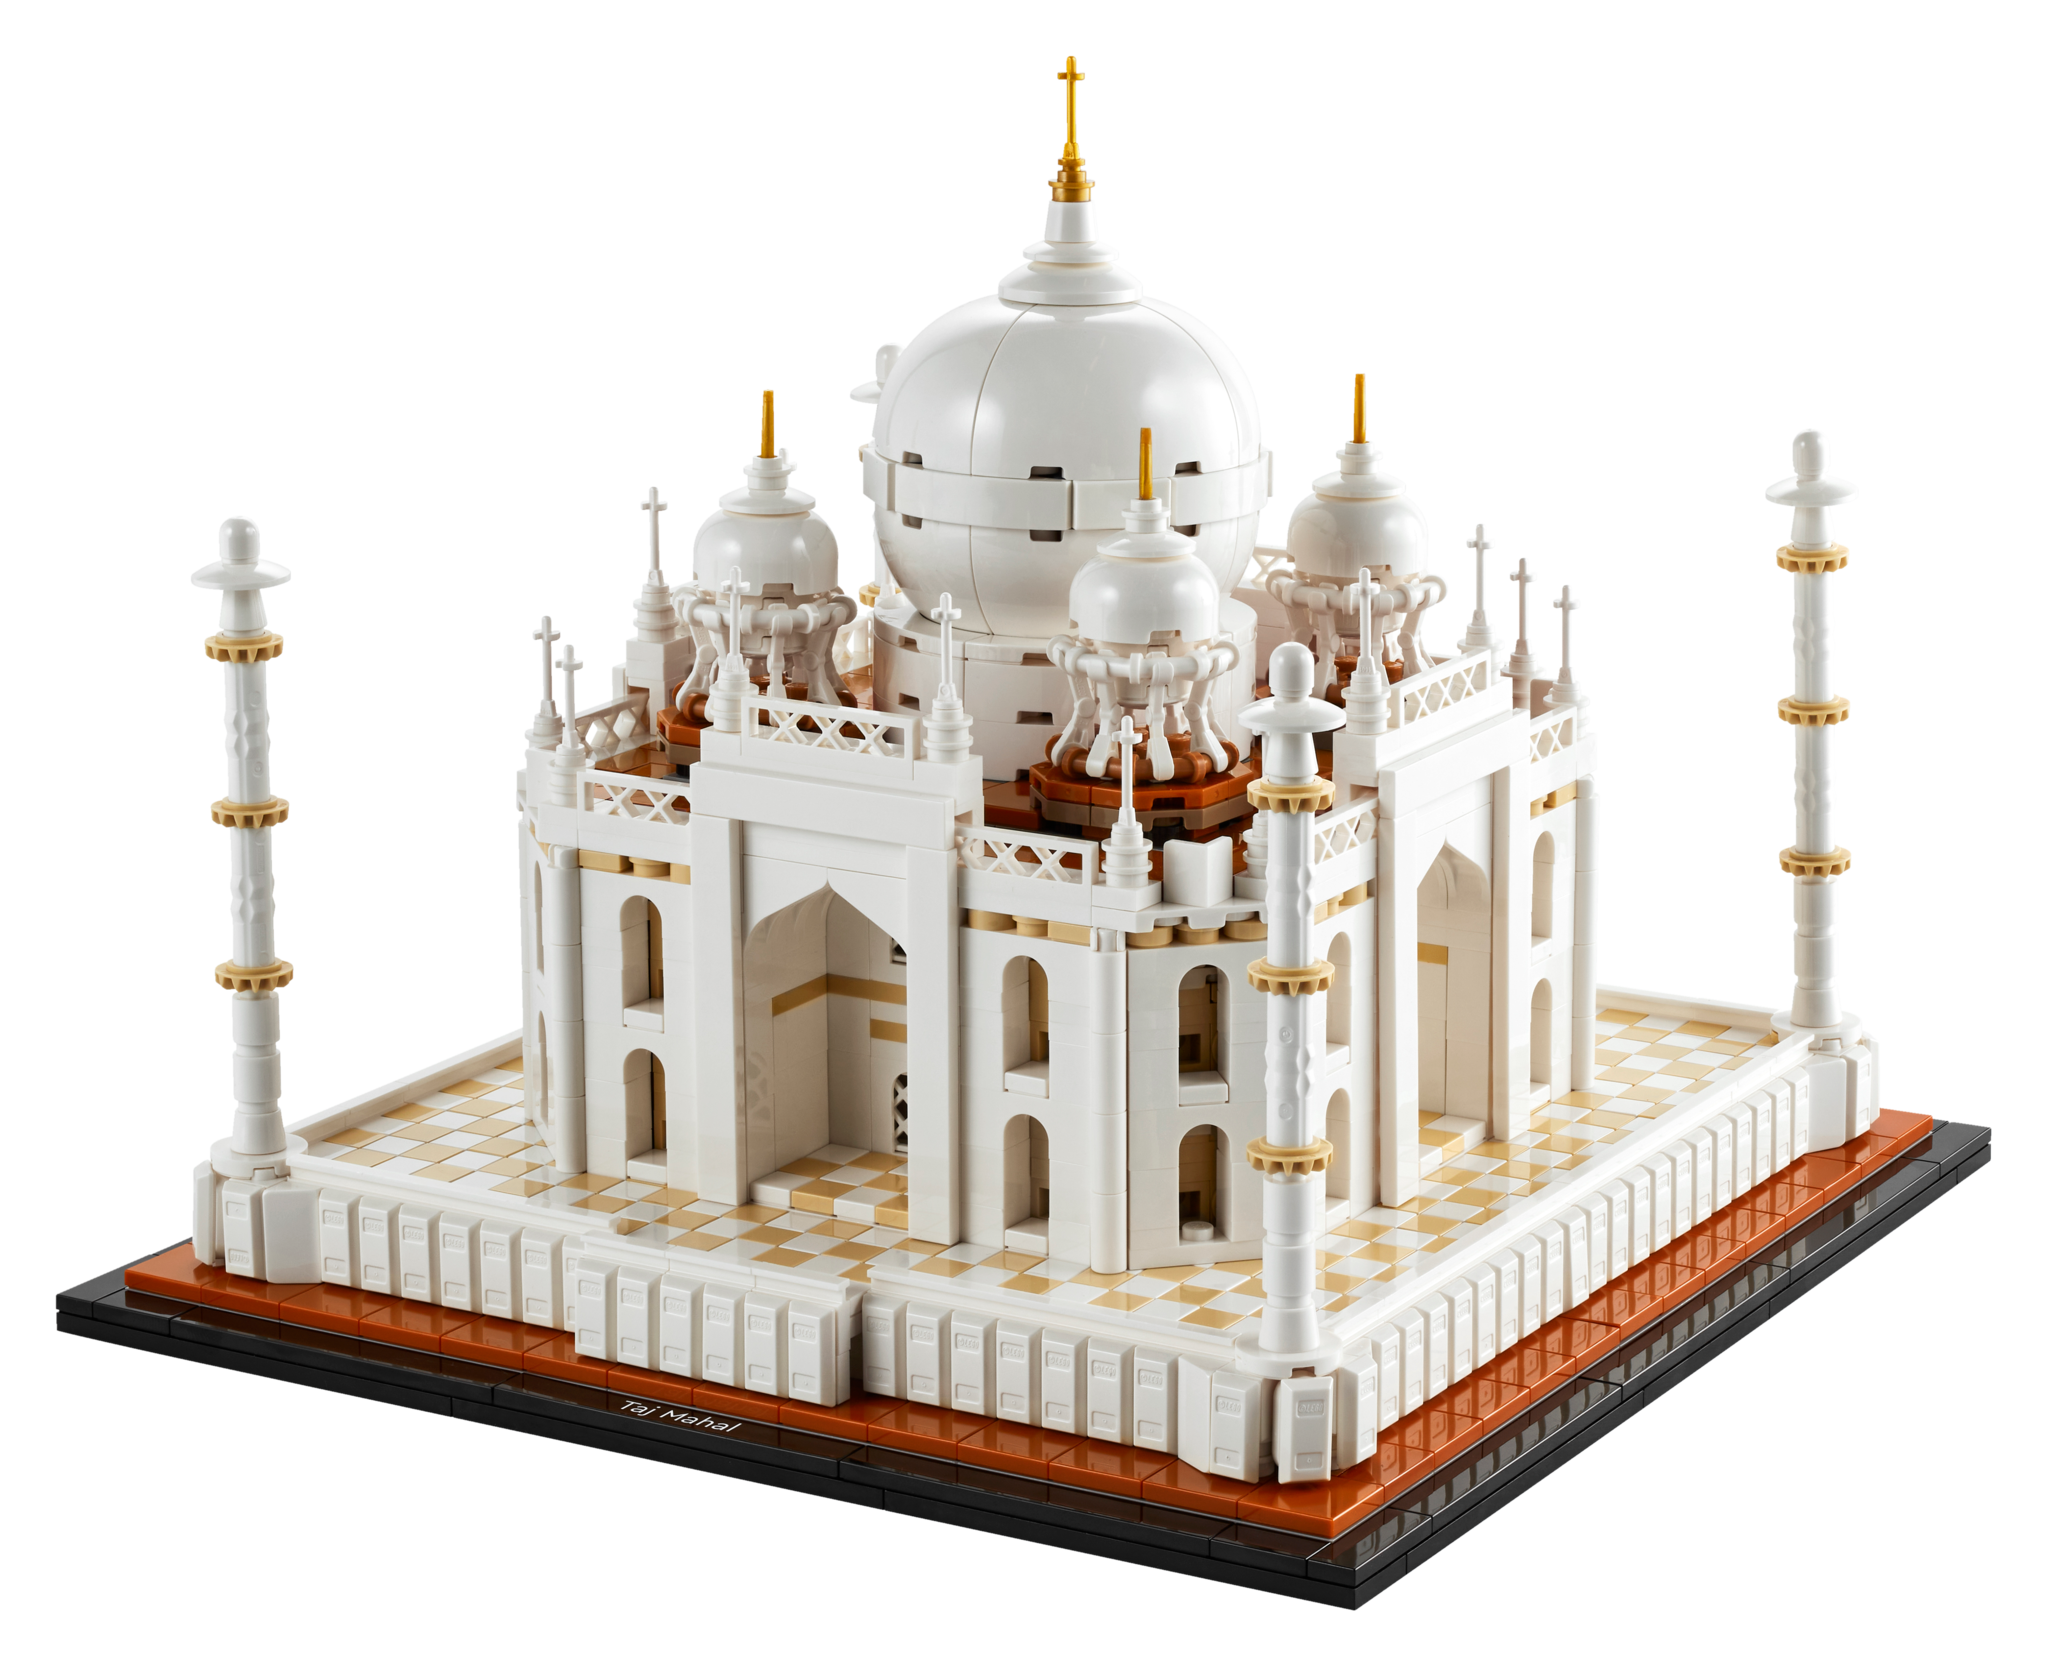 LEGO: Architecture - Taj Mahal